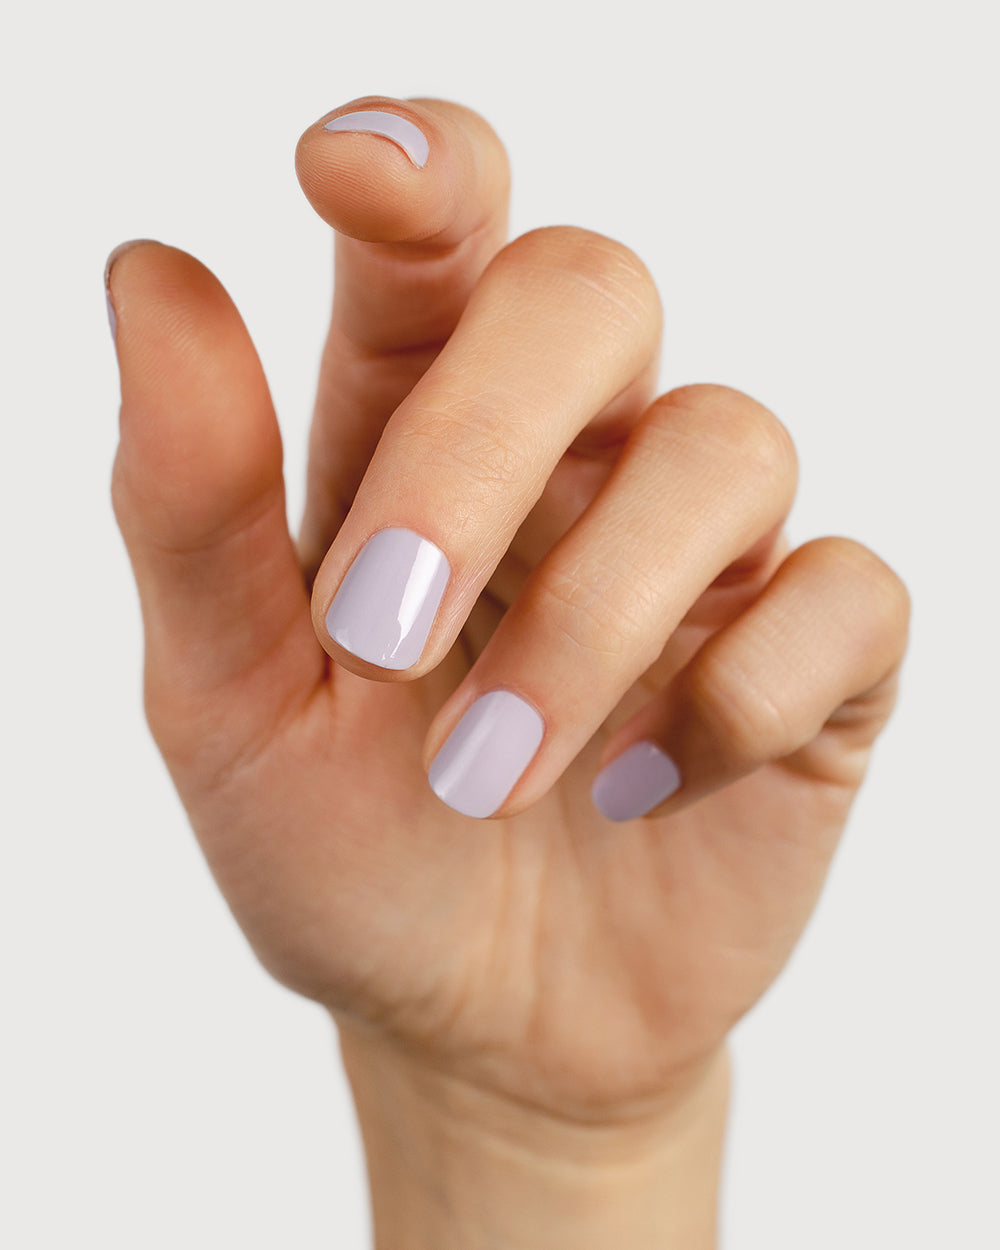 Pastel purple-grey nail polish hand swatch on fair skin tone